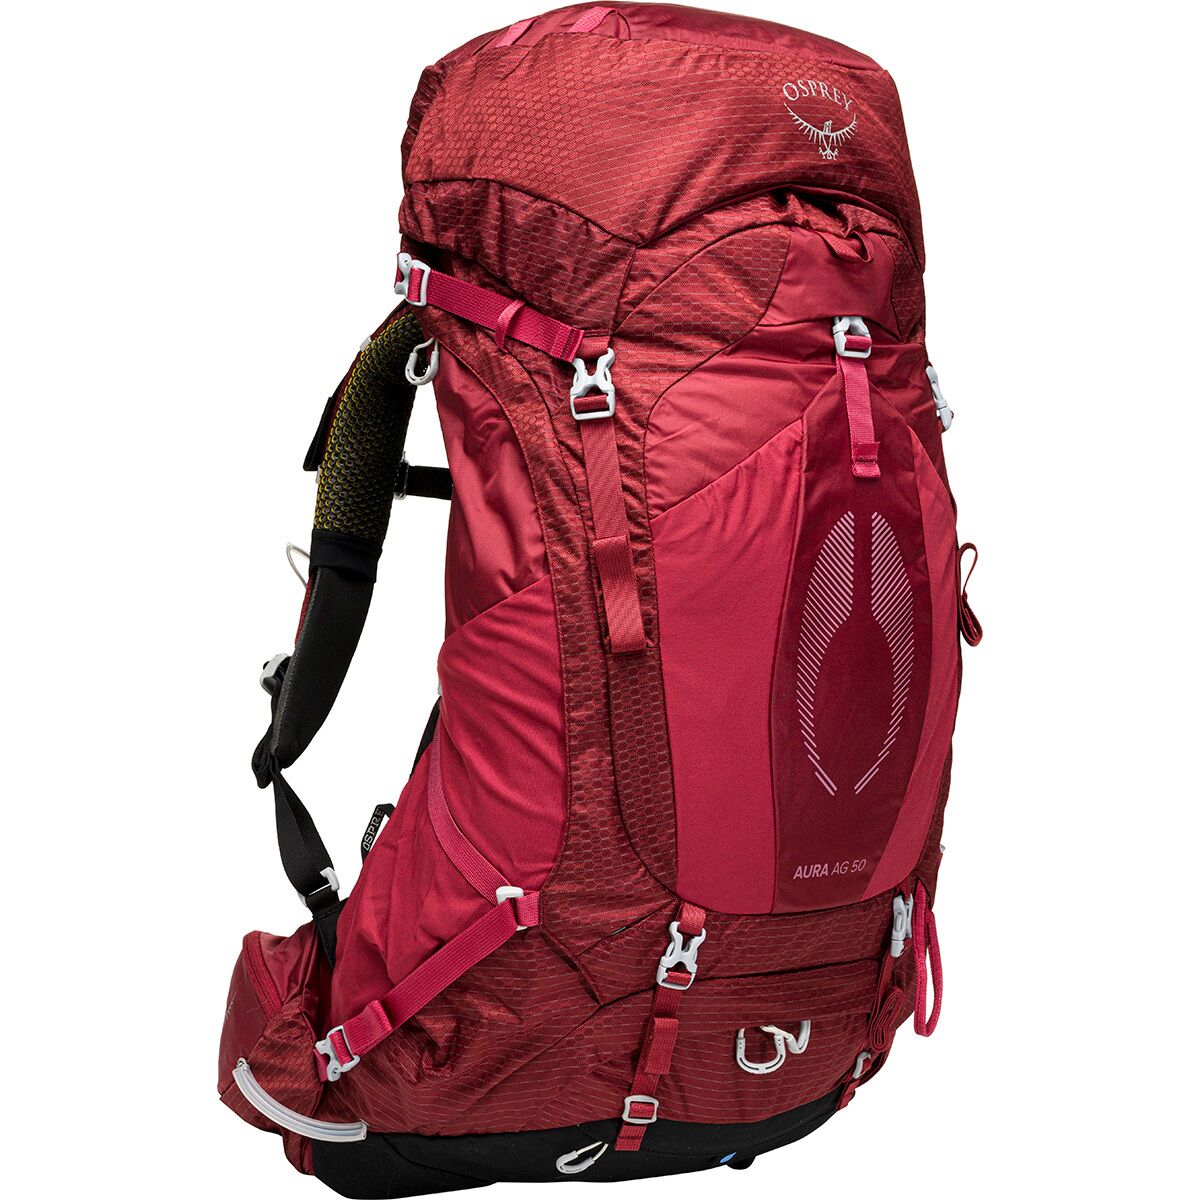 binnen Pracht ik lees een boek Osprey Packs Aura AG 50L Backpack - Women's - Hike & Camp